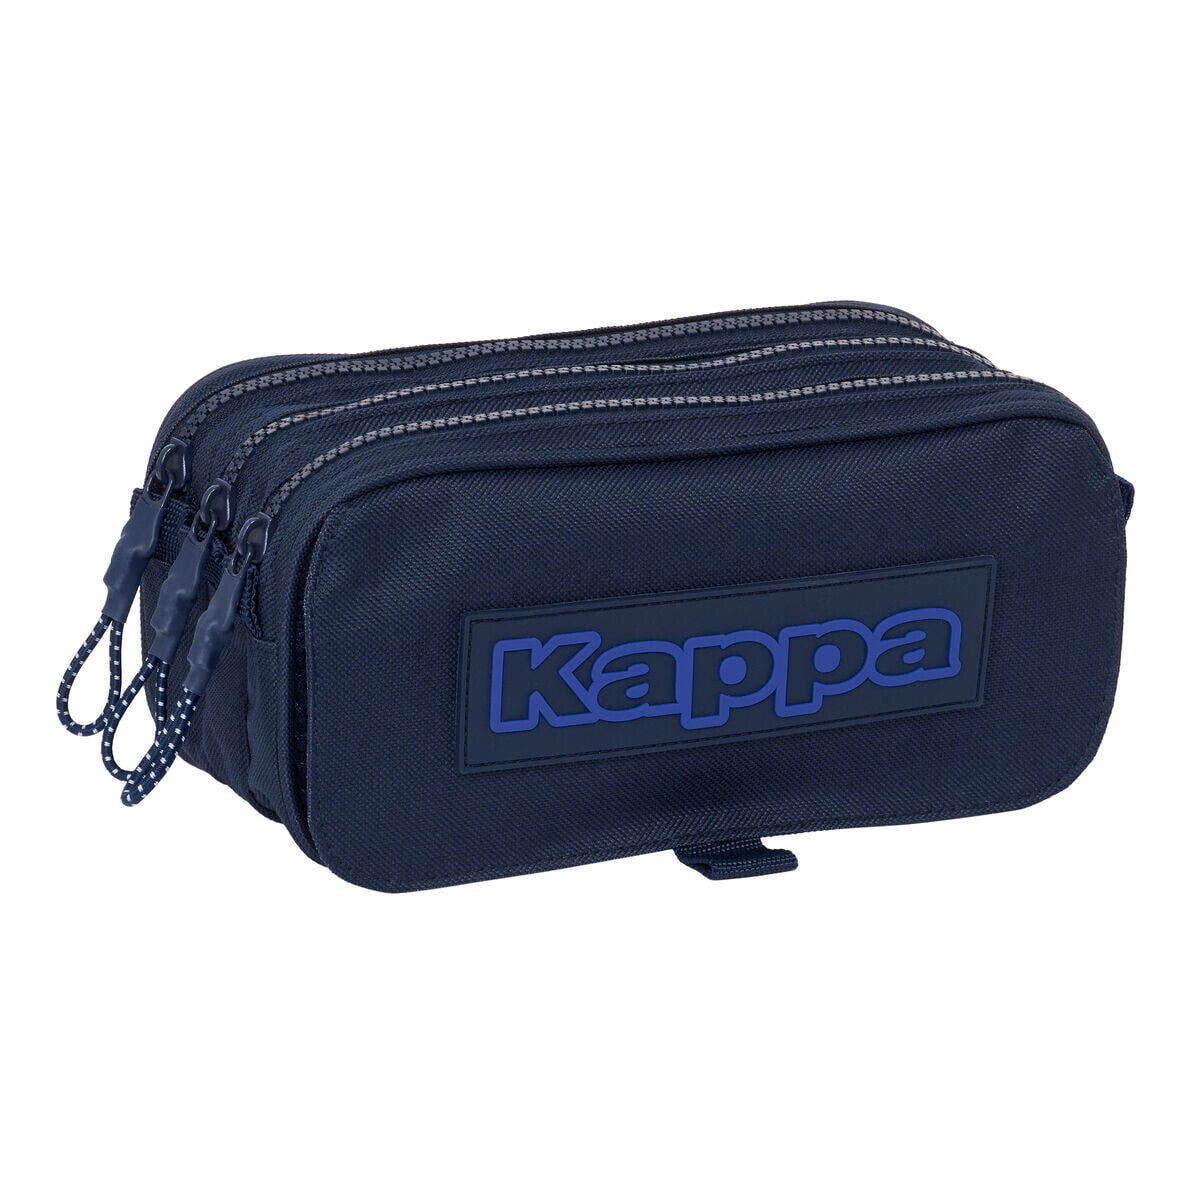 Triple Carry-all Kappa Blue night Navy Blue 21,5 x 10 x 8 cm